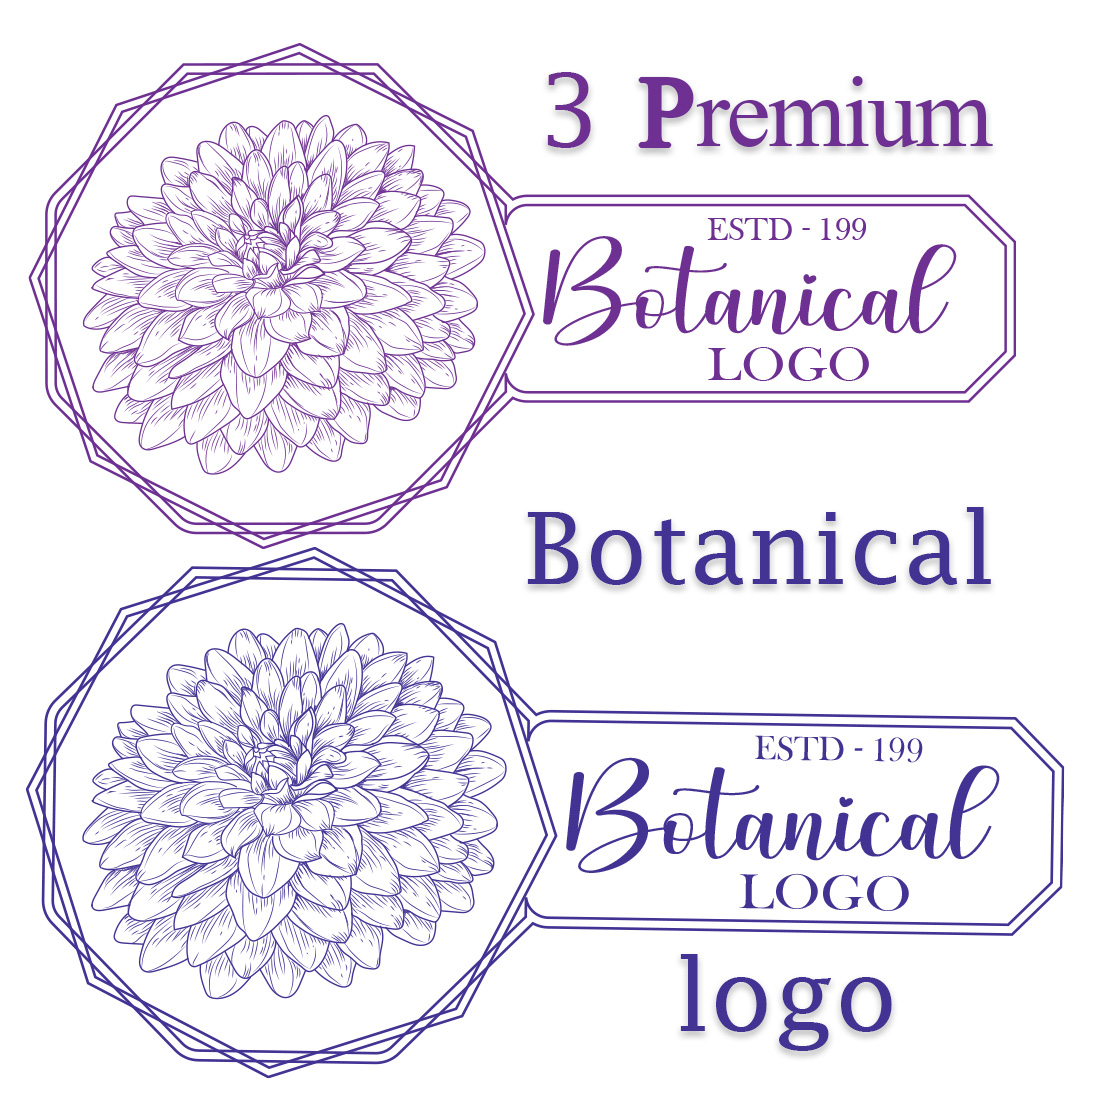 Premium Botanical Logo main cover.